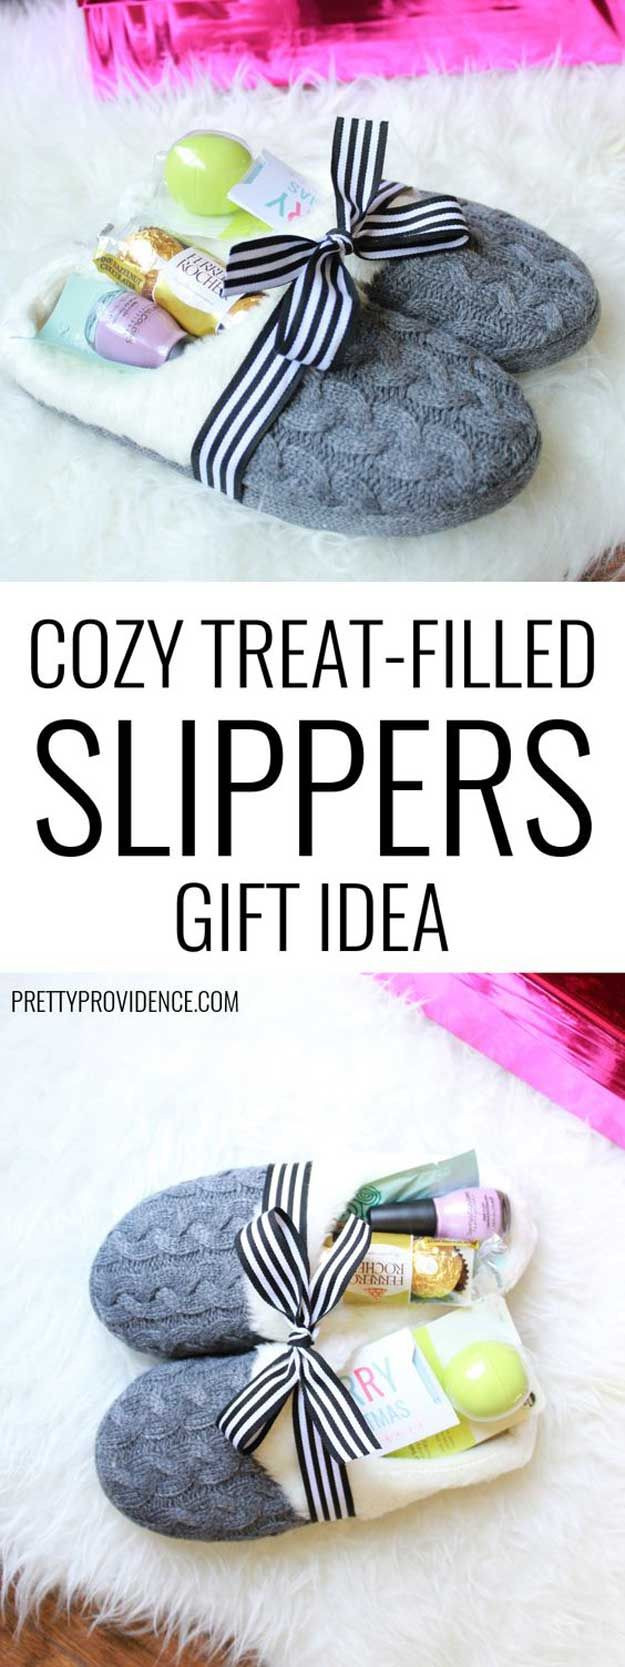 12 Days Of Christmas Gift Ideas For Her
 Best 25 Christmas ideas on Pinterest